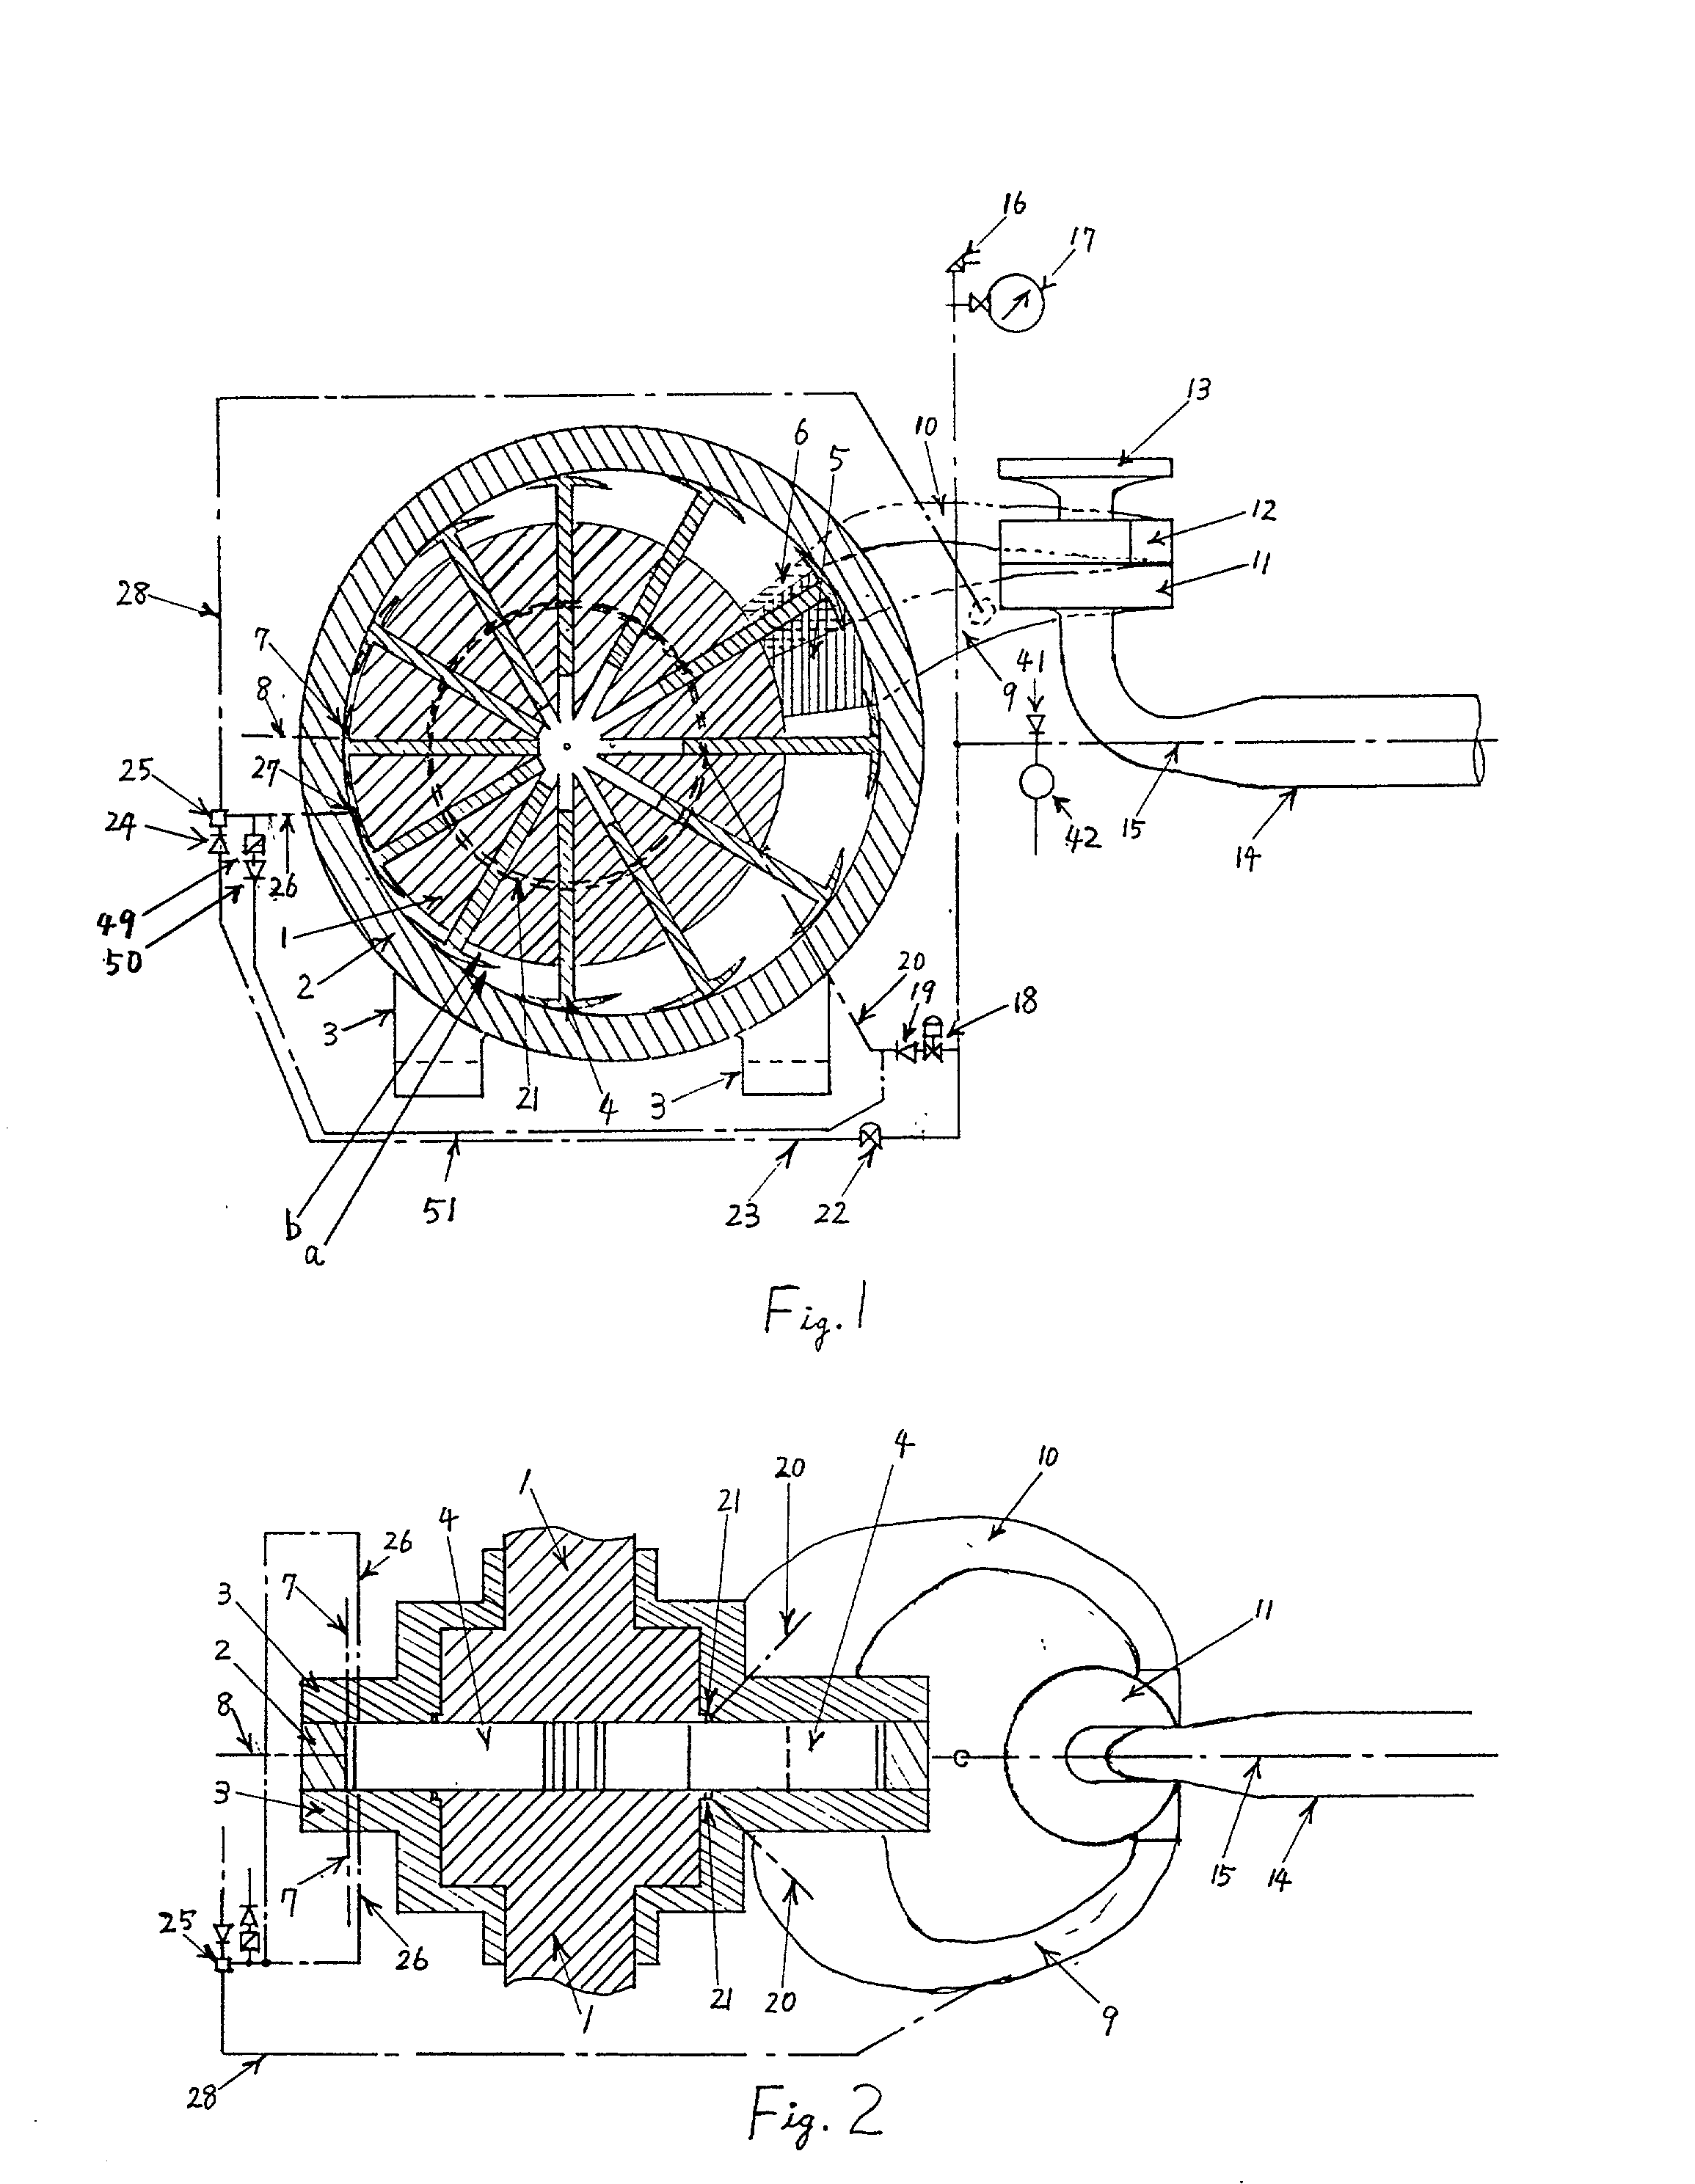 Reciprocating vane type rotary internal combustion engine (vane engine)